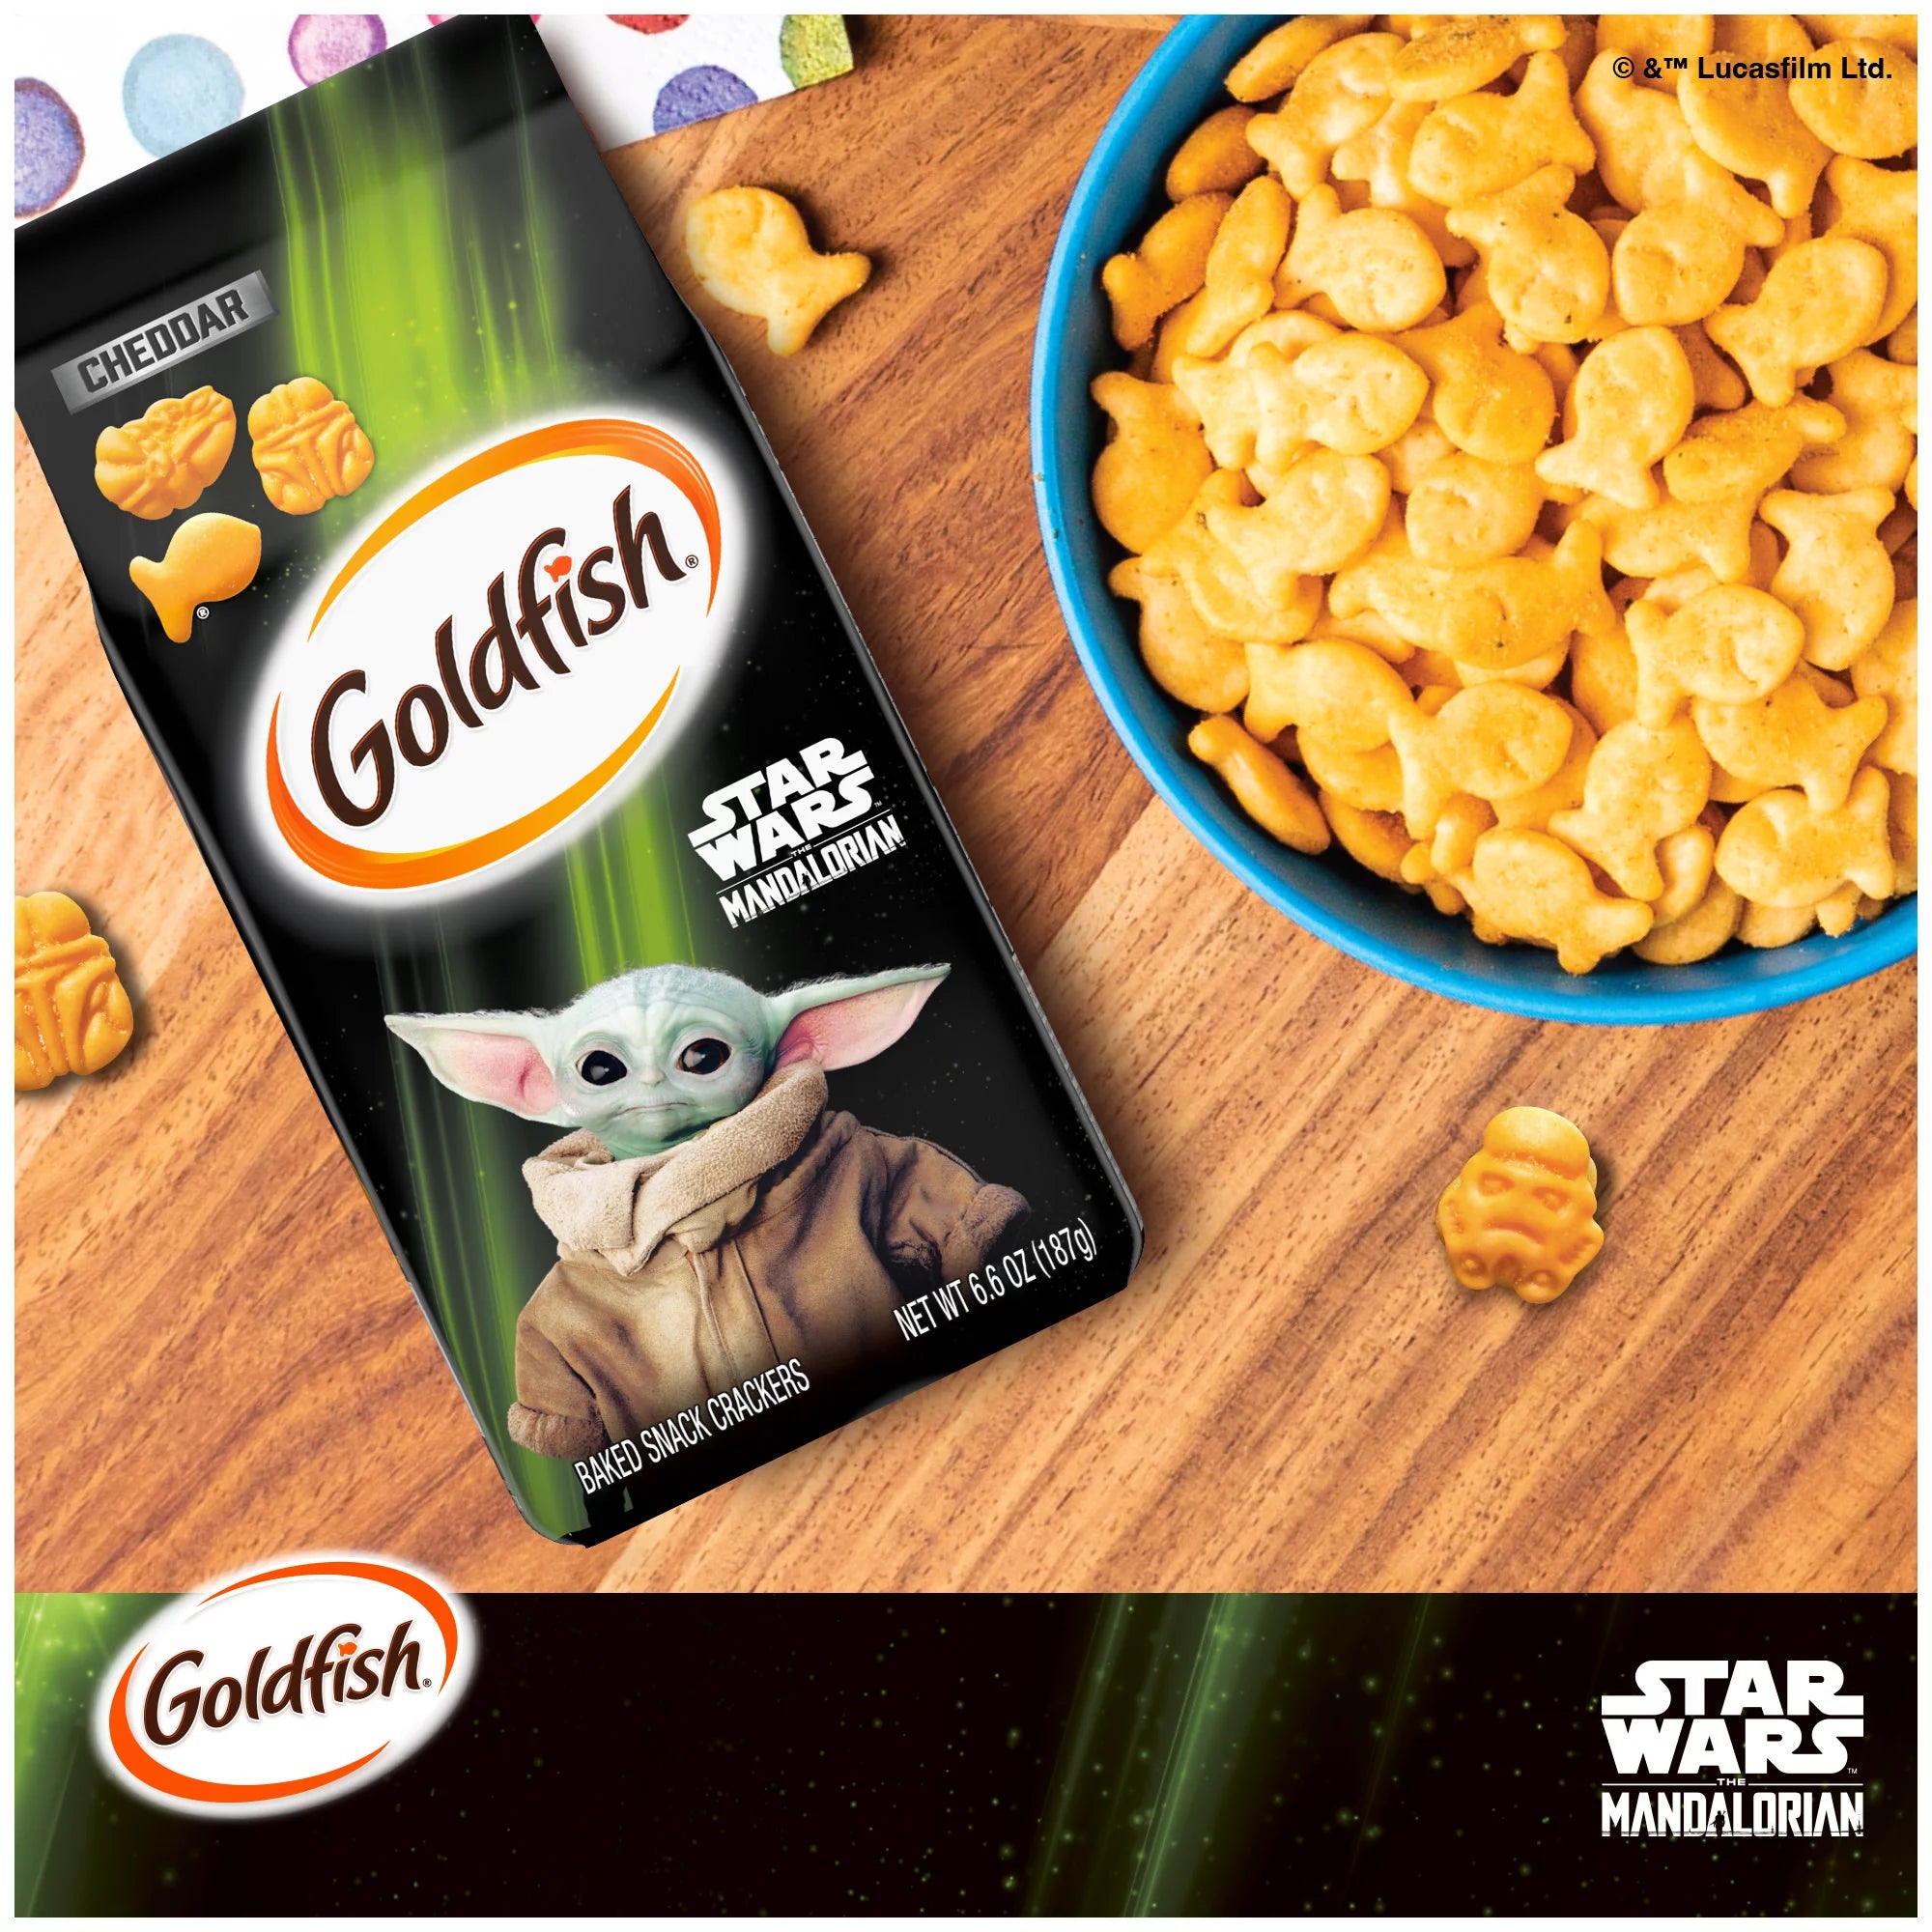 Goldfish Star Wars Mandalorian Cheddar Crackers